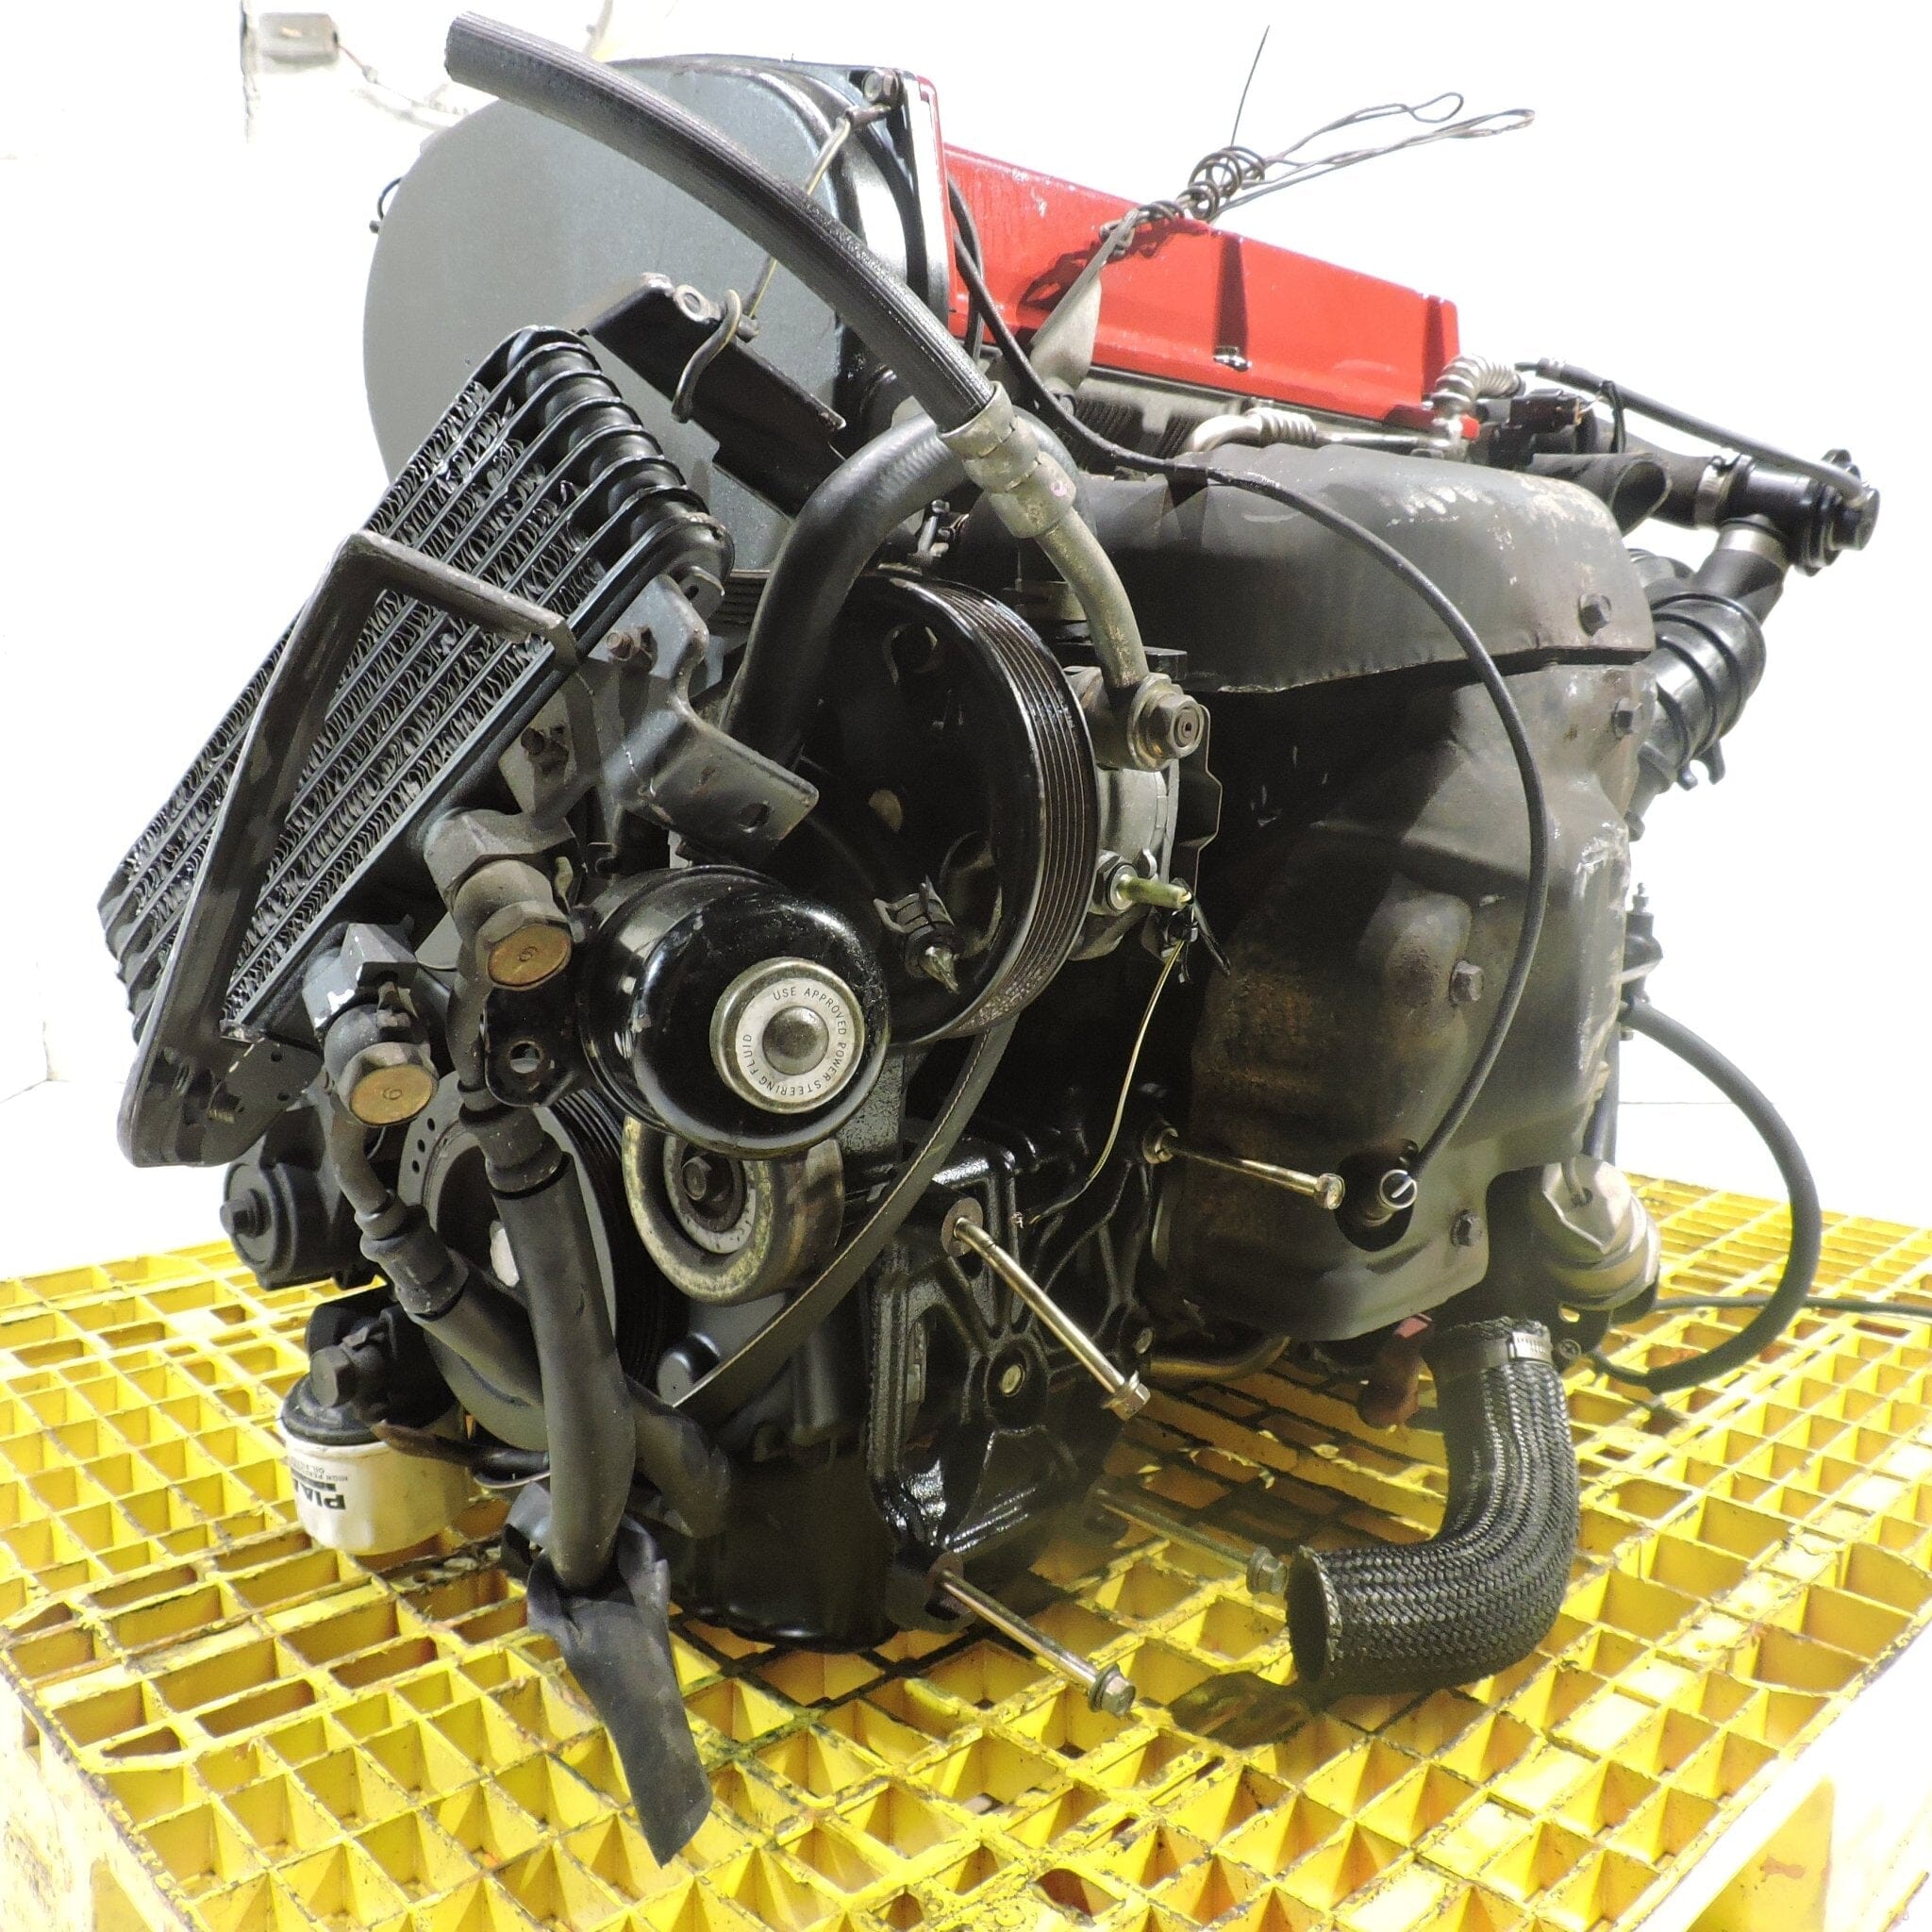 Mitsubishi Evolution 7 VII 8 VIII Turbo 2.0L JDM Engine Transmission Manual Swap - 4G63